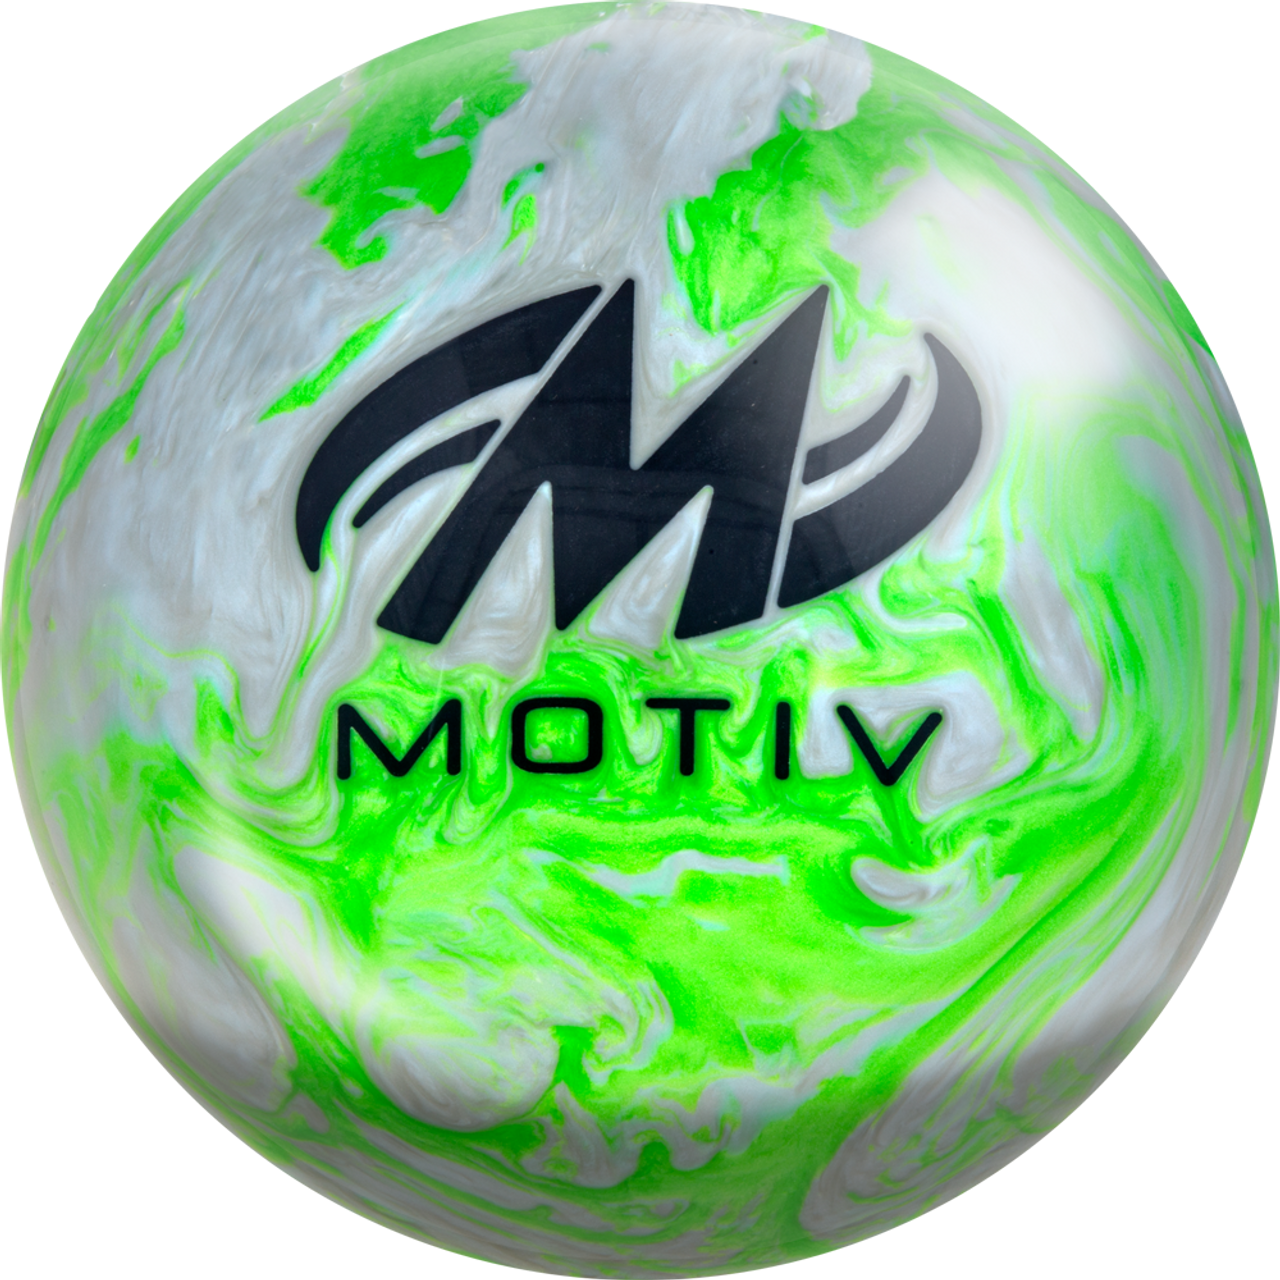 Motiv Shock Double Lime Green 2 Ball Bowling Bag